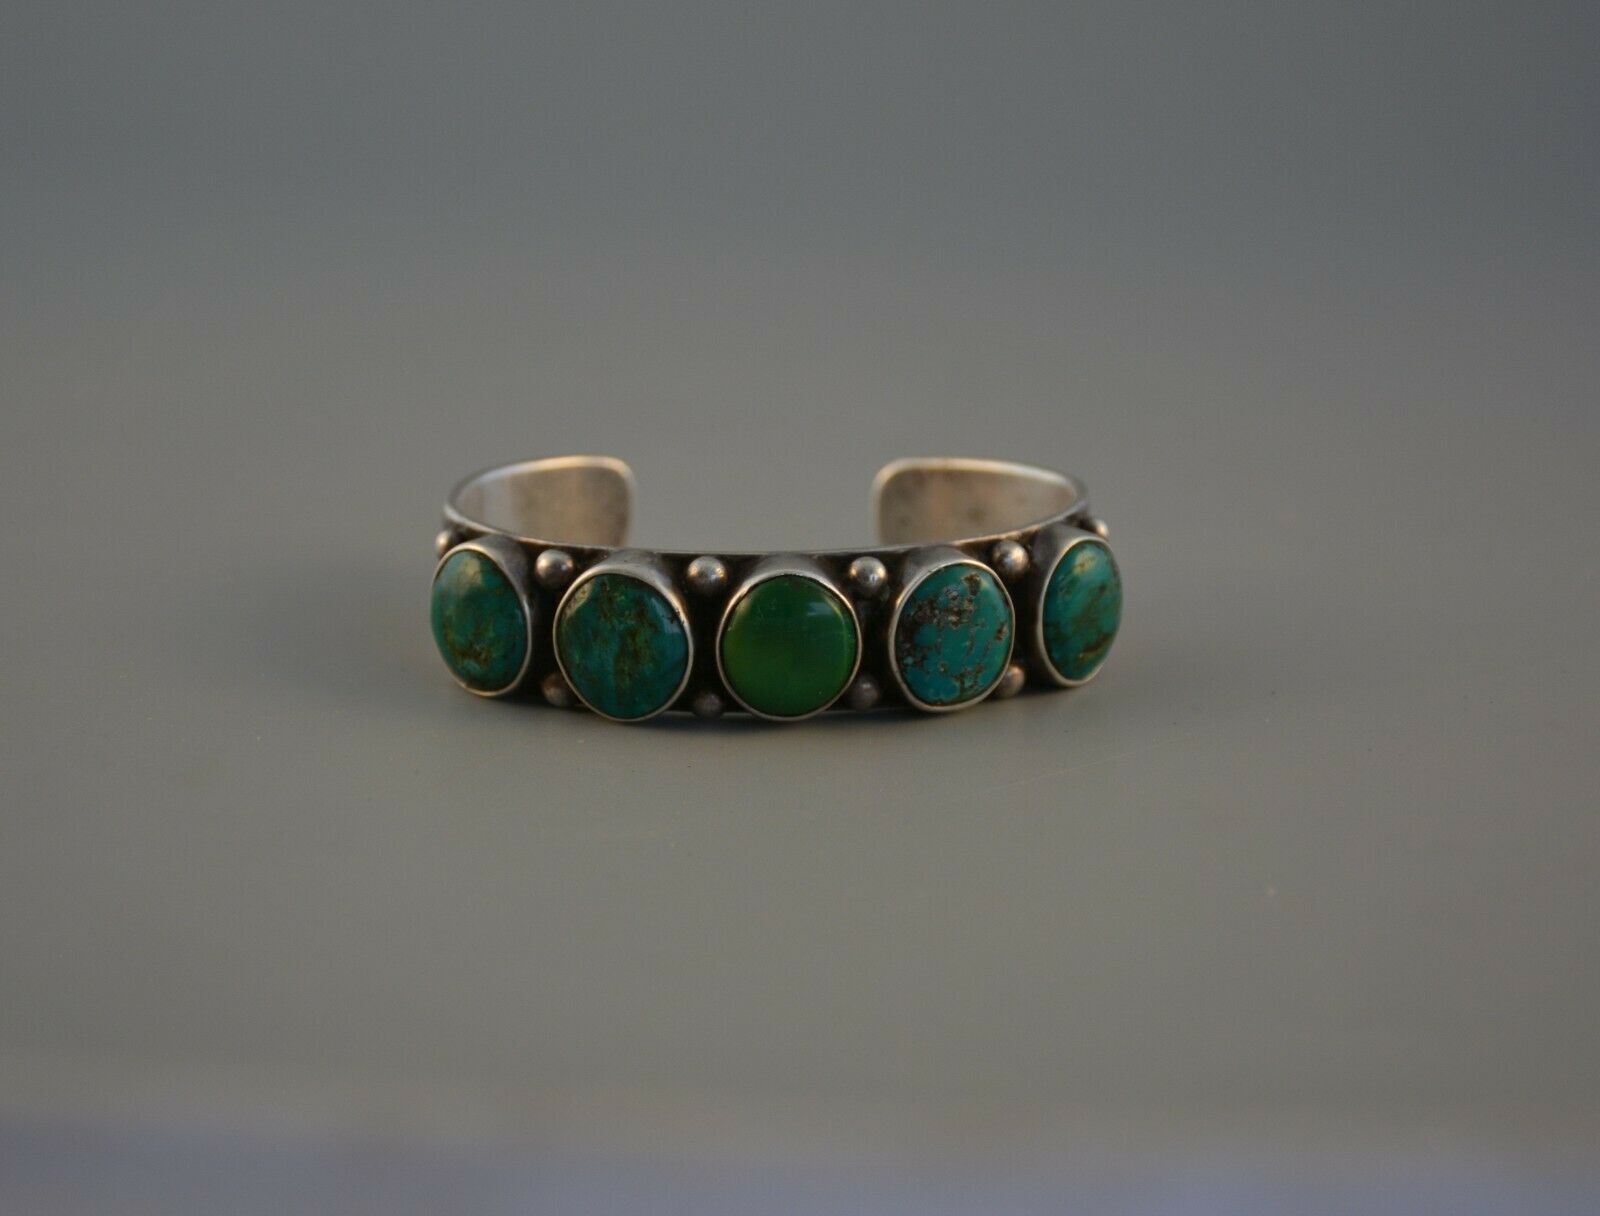 Old Early Navajo Heavy Ingot Silver Bracelet - 5 Turquoise Stones - 7 3/8" @